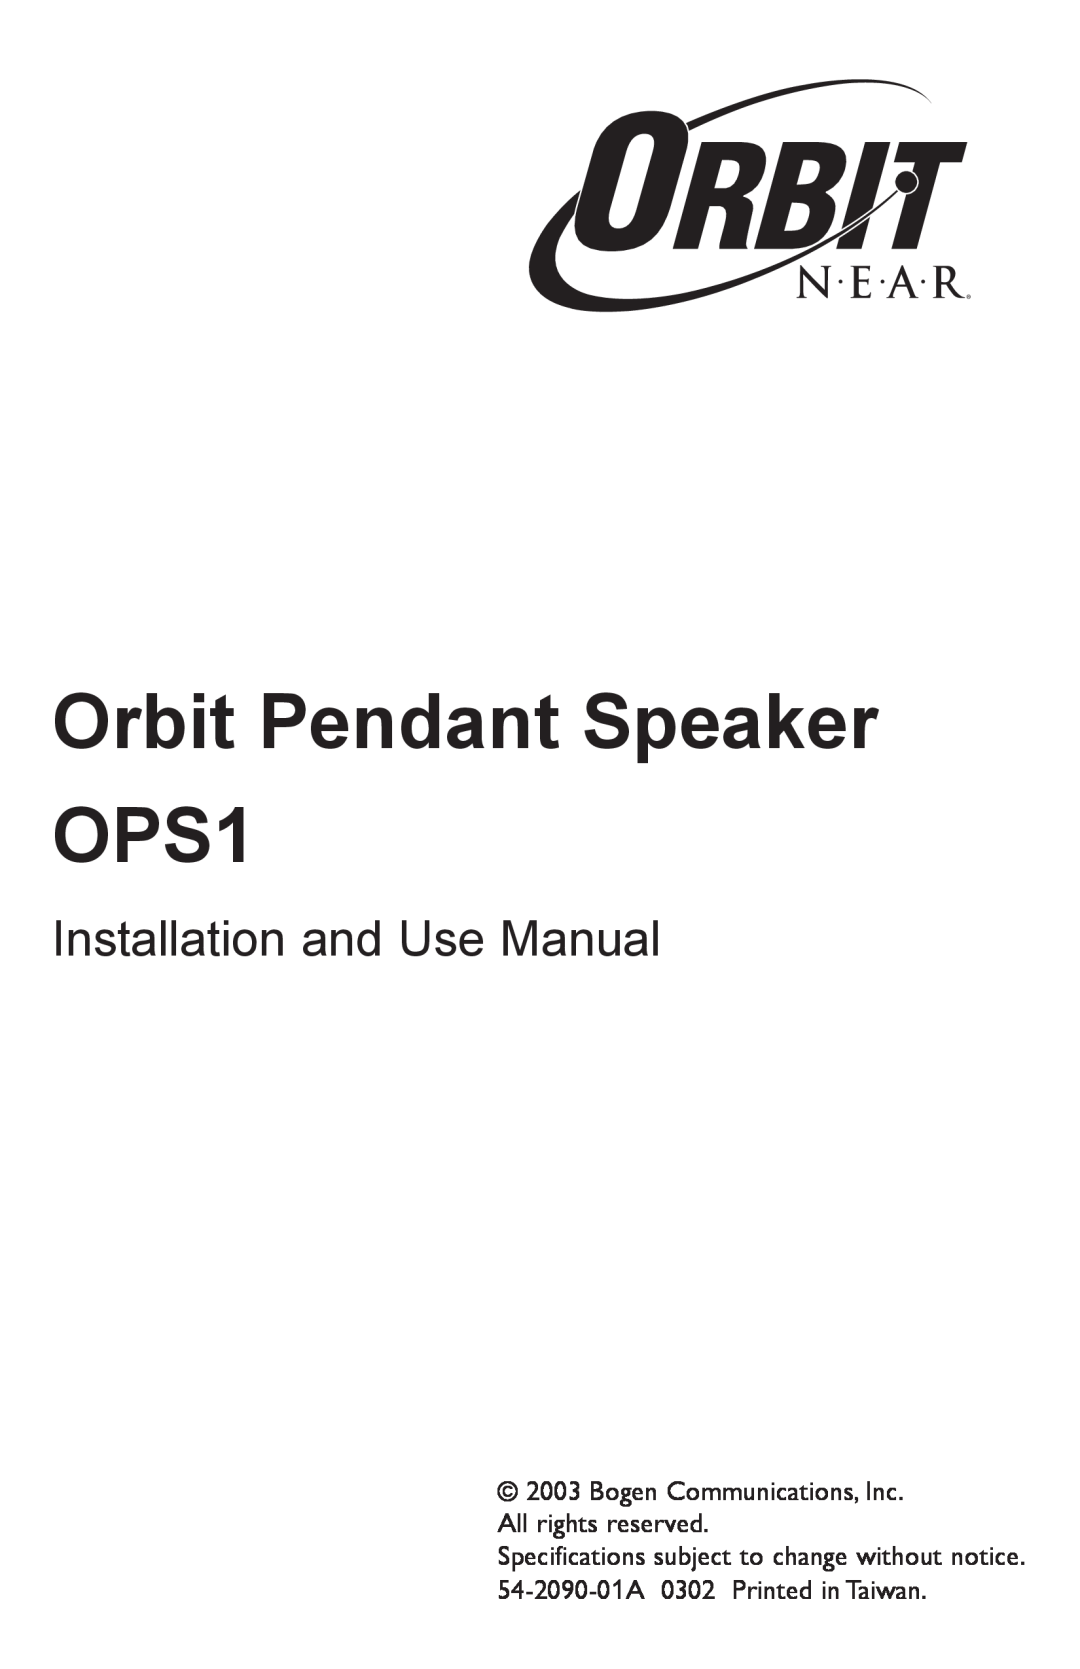 Bogen specifications Orbit Pendant Speaker OPS1, Installation and Use Manual 